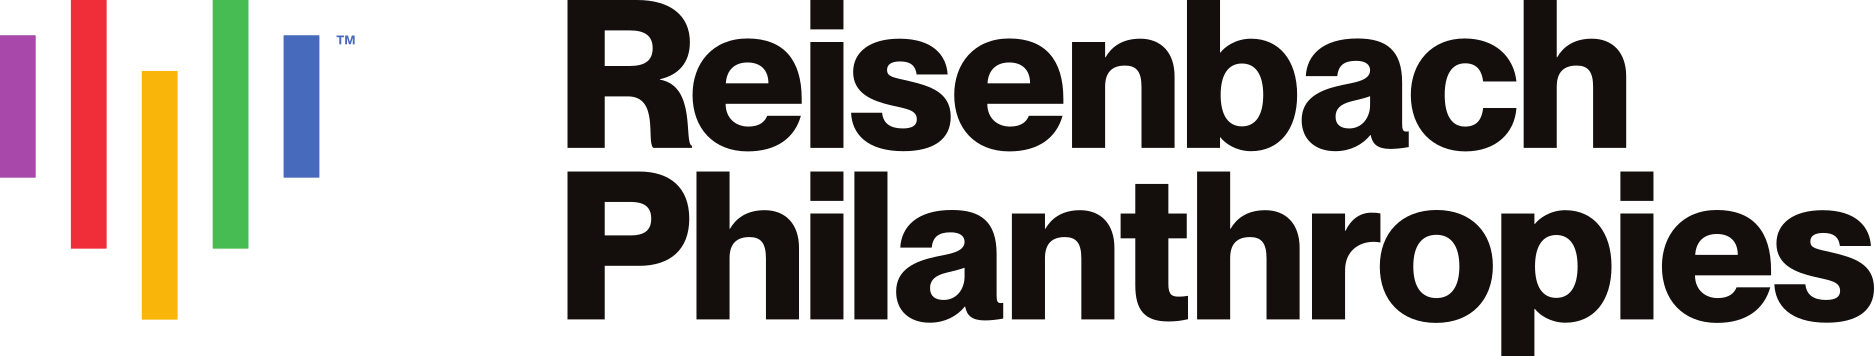 Reisenbach Philanthropies logo